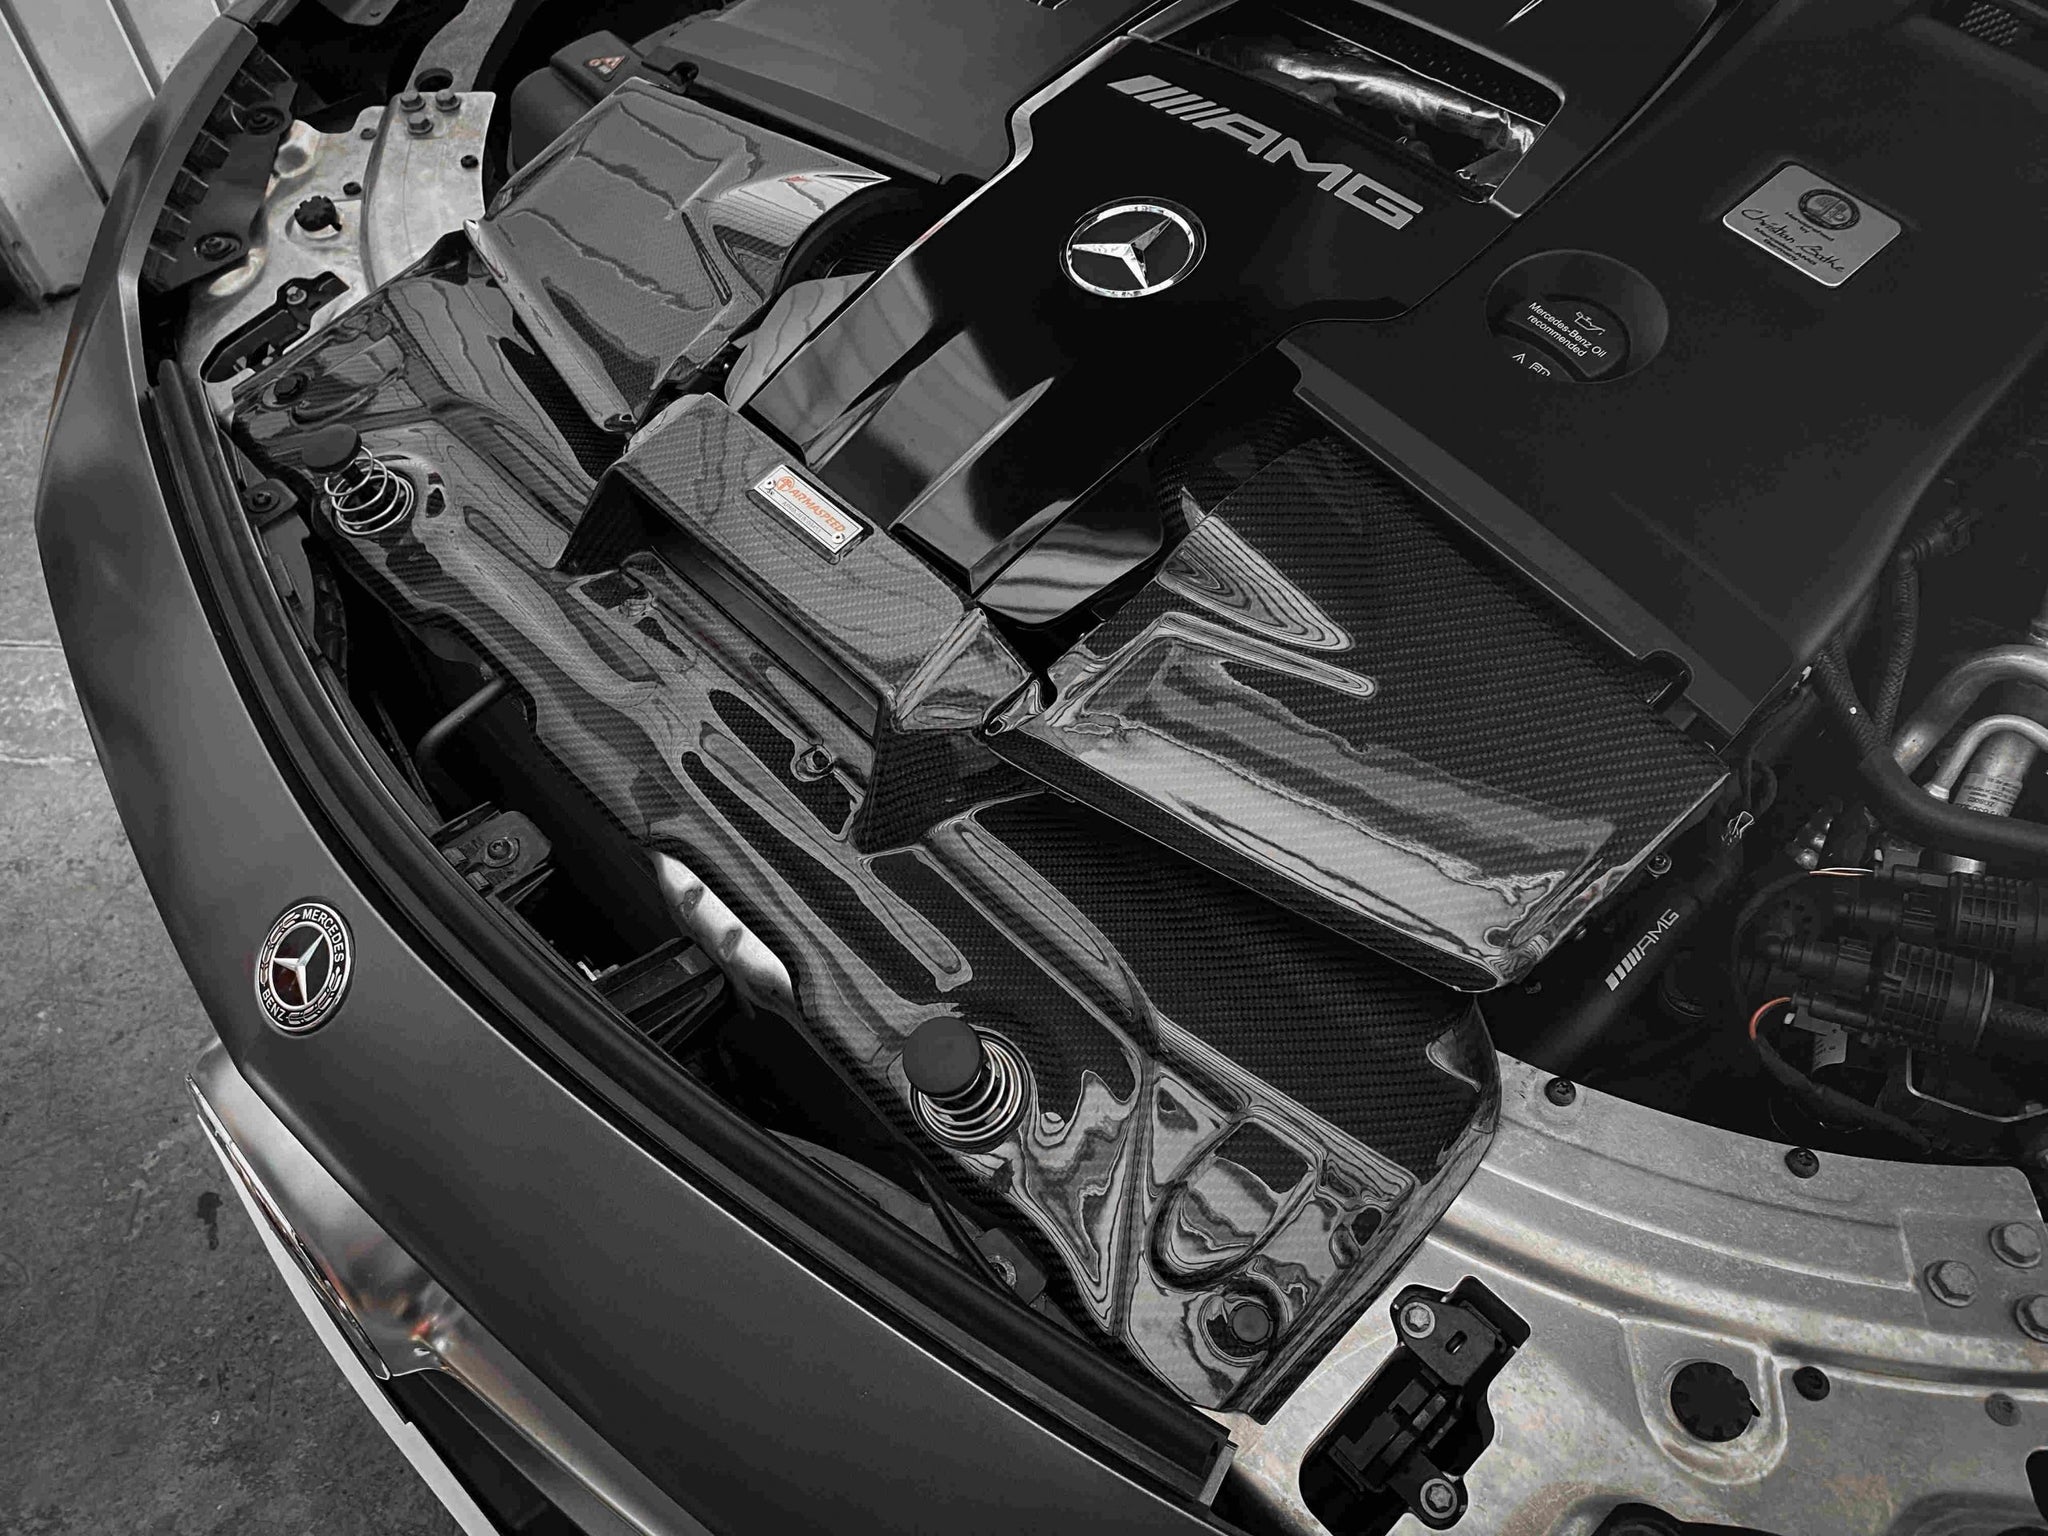 Toma de aire frío de fibra de carbono Armaspeed Mercedes-Benz W213 AMG E63 - ML Performance UK